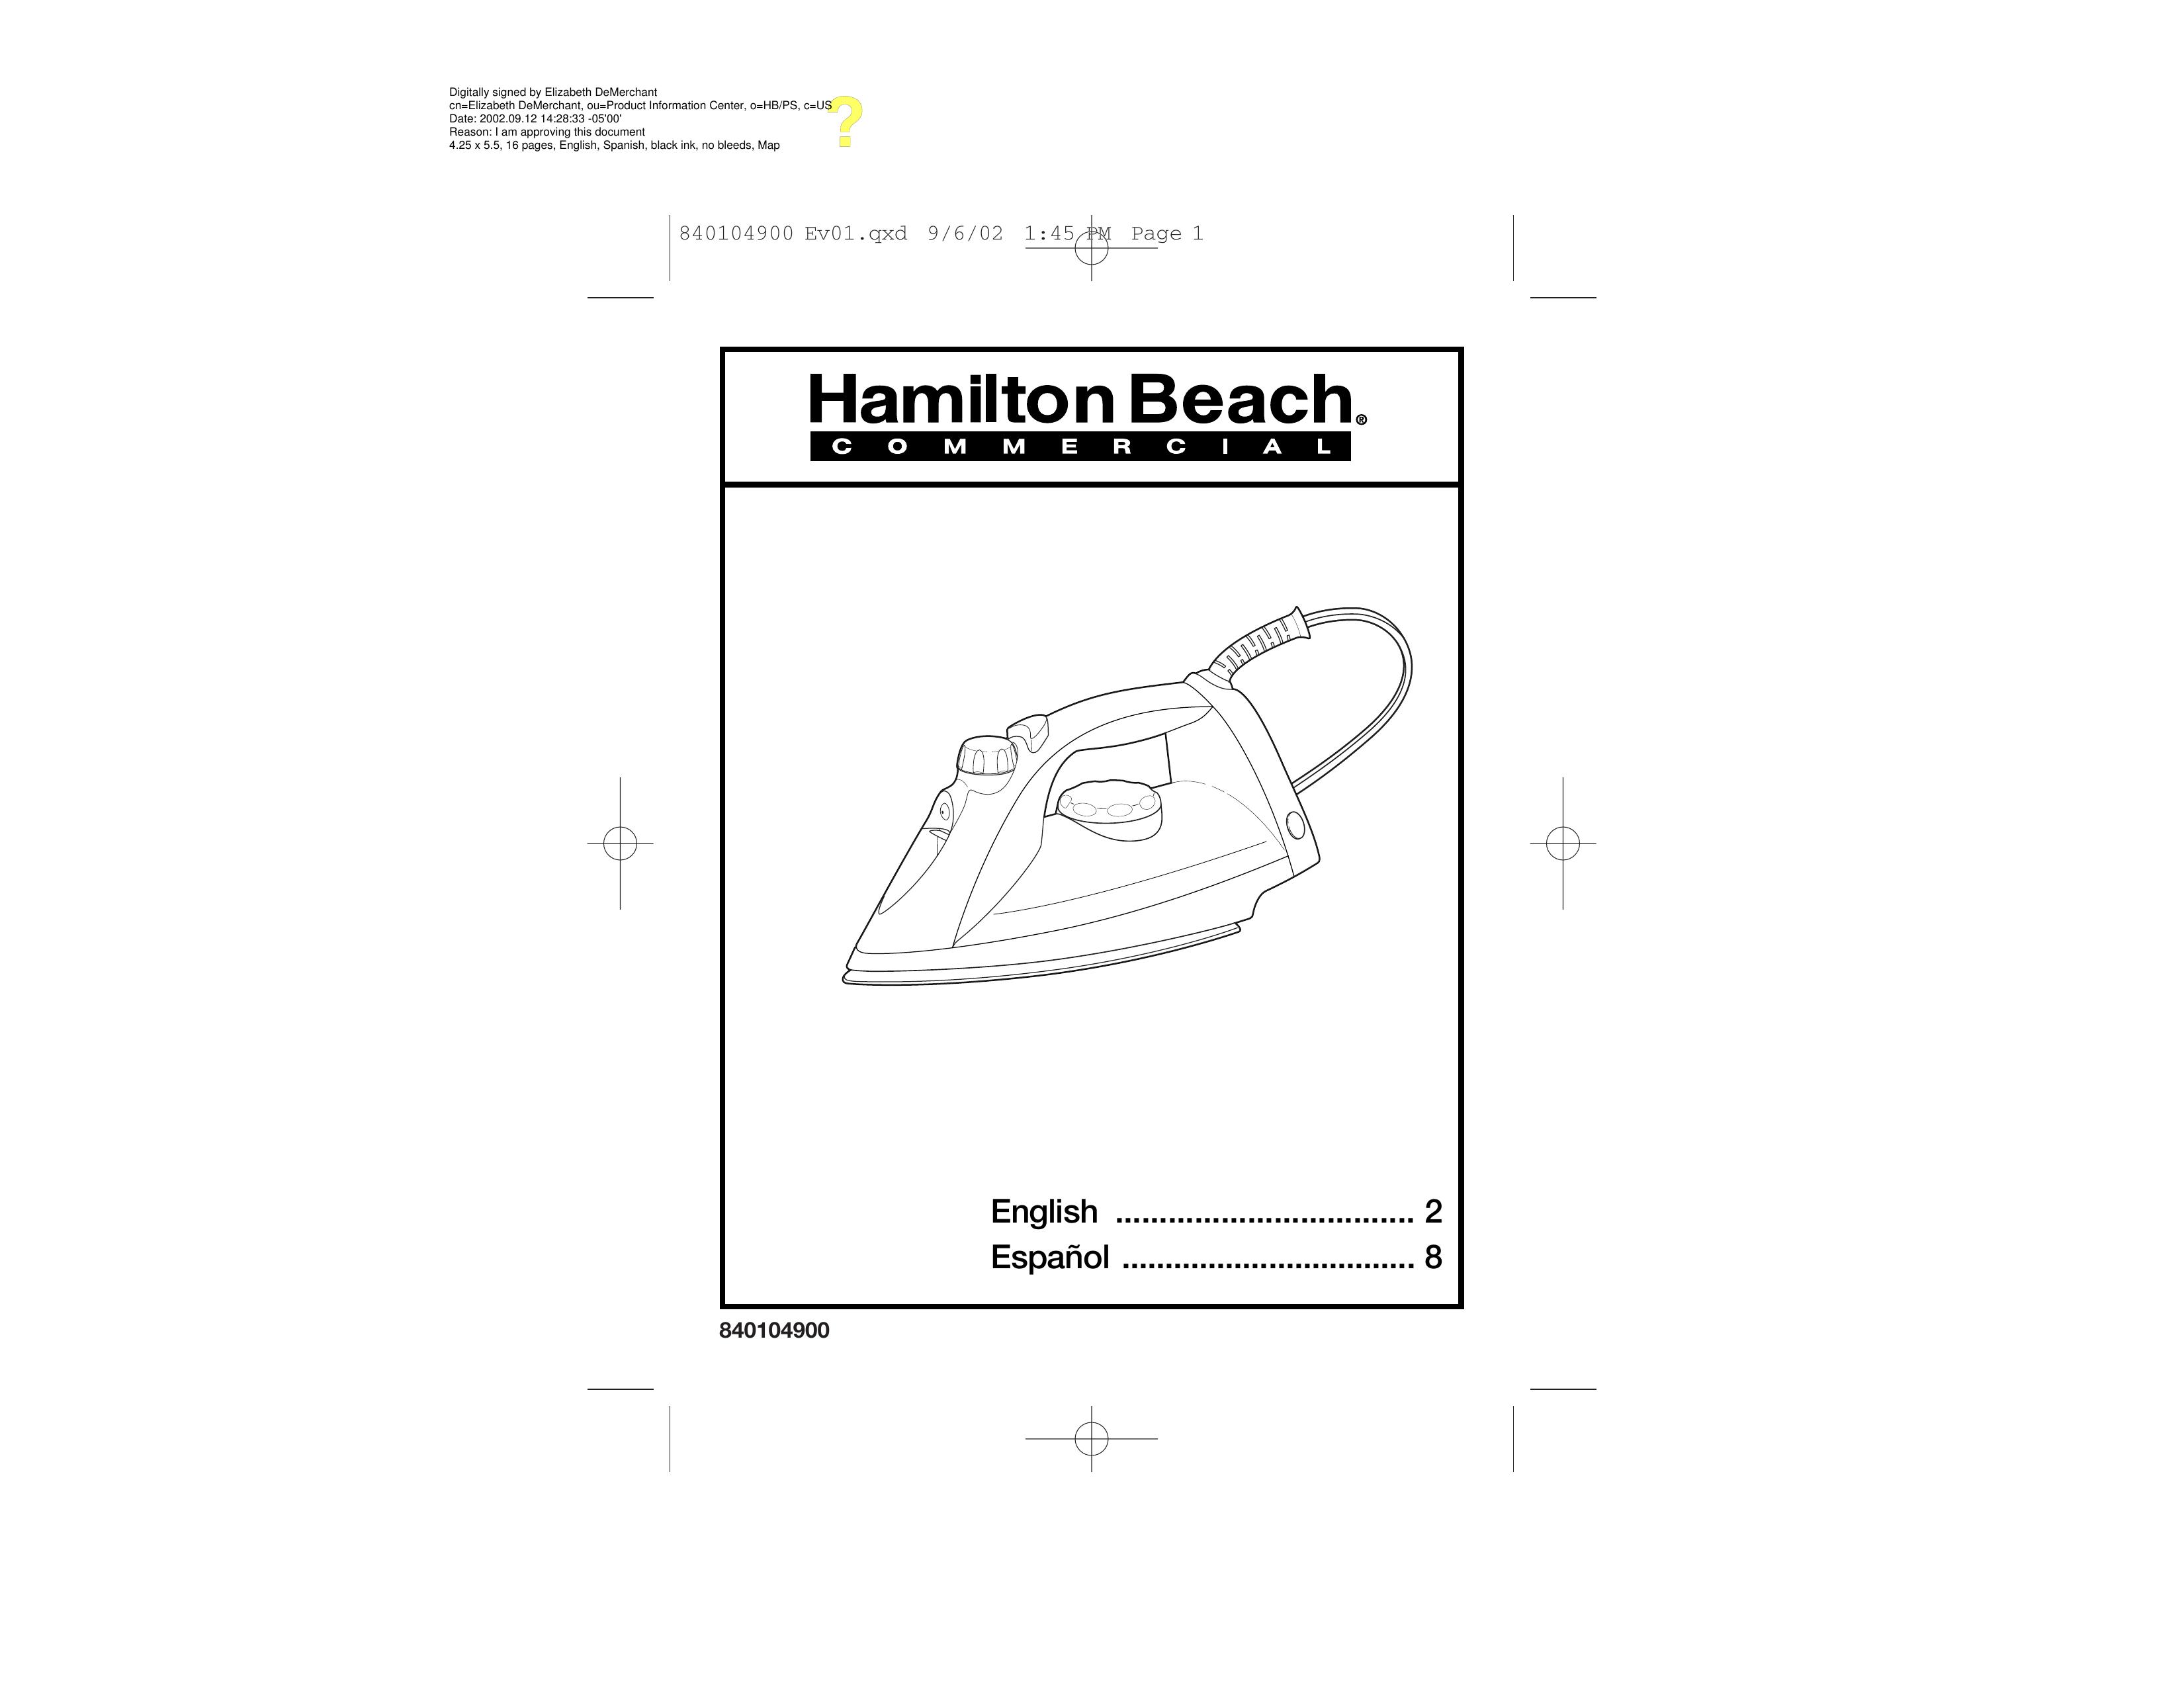 Hamilton Beach 840104900 Iron User Manual